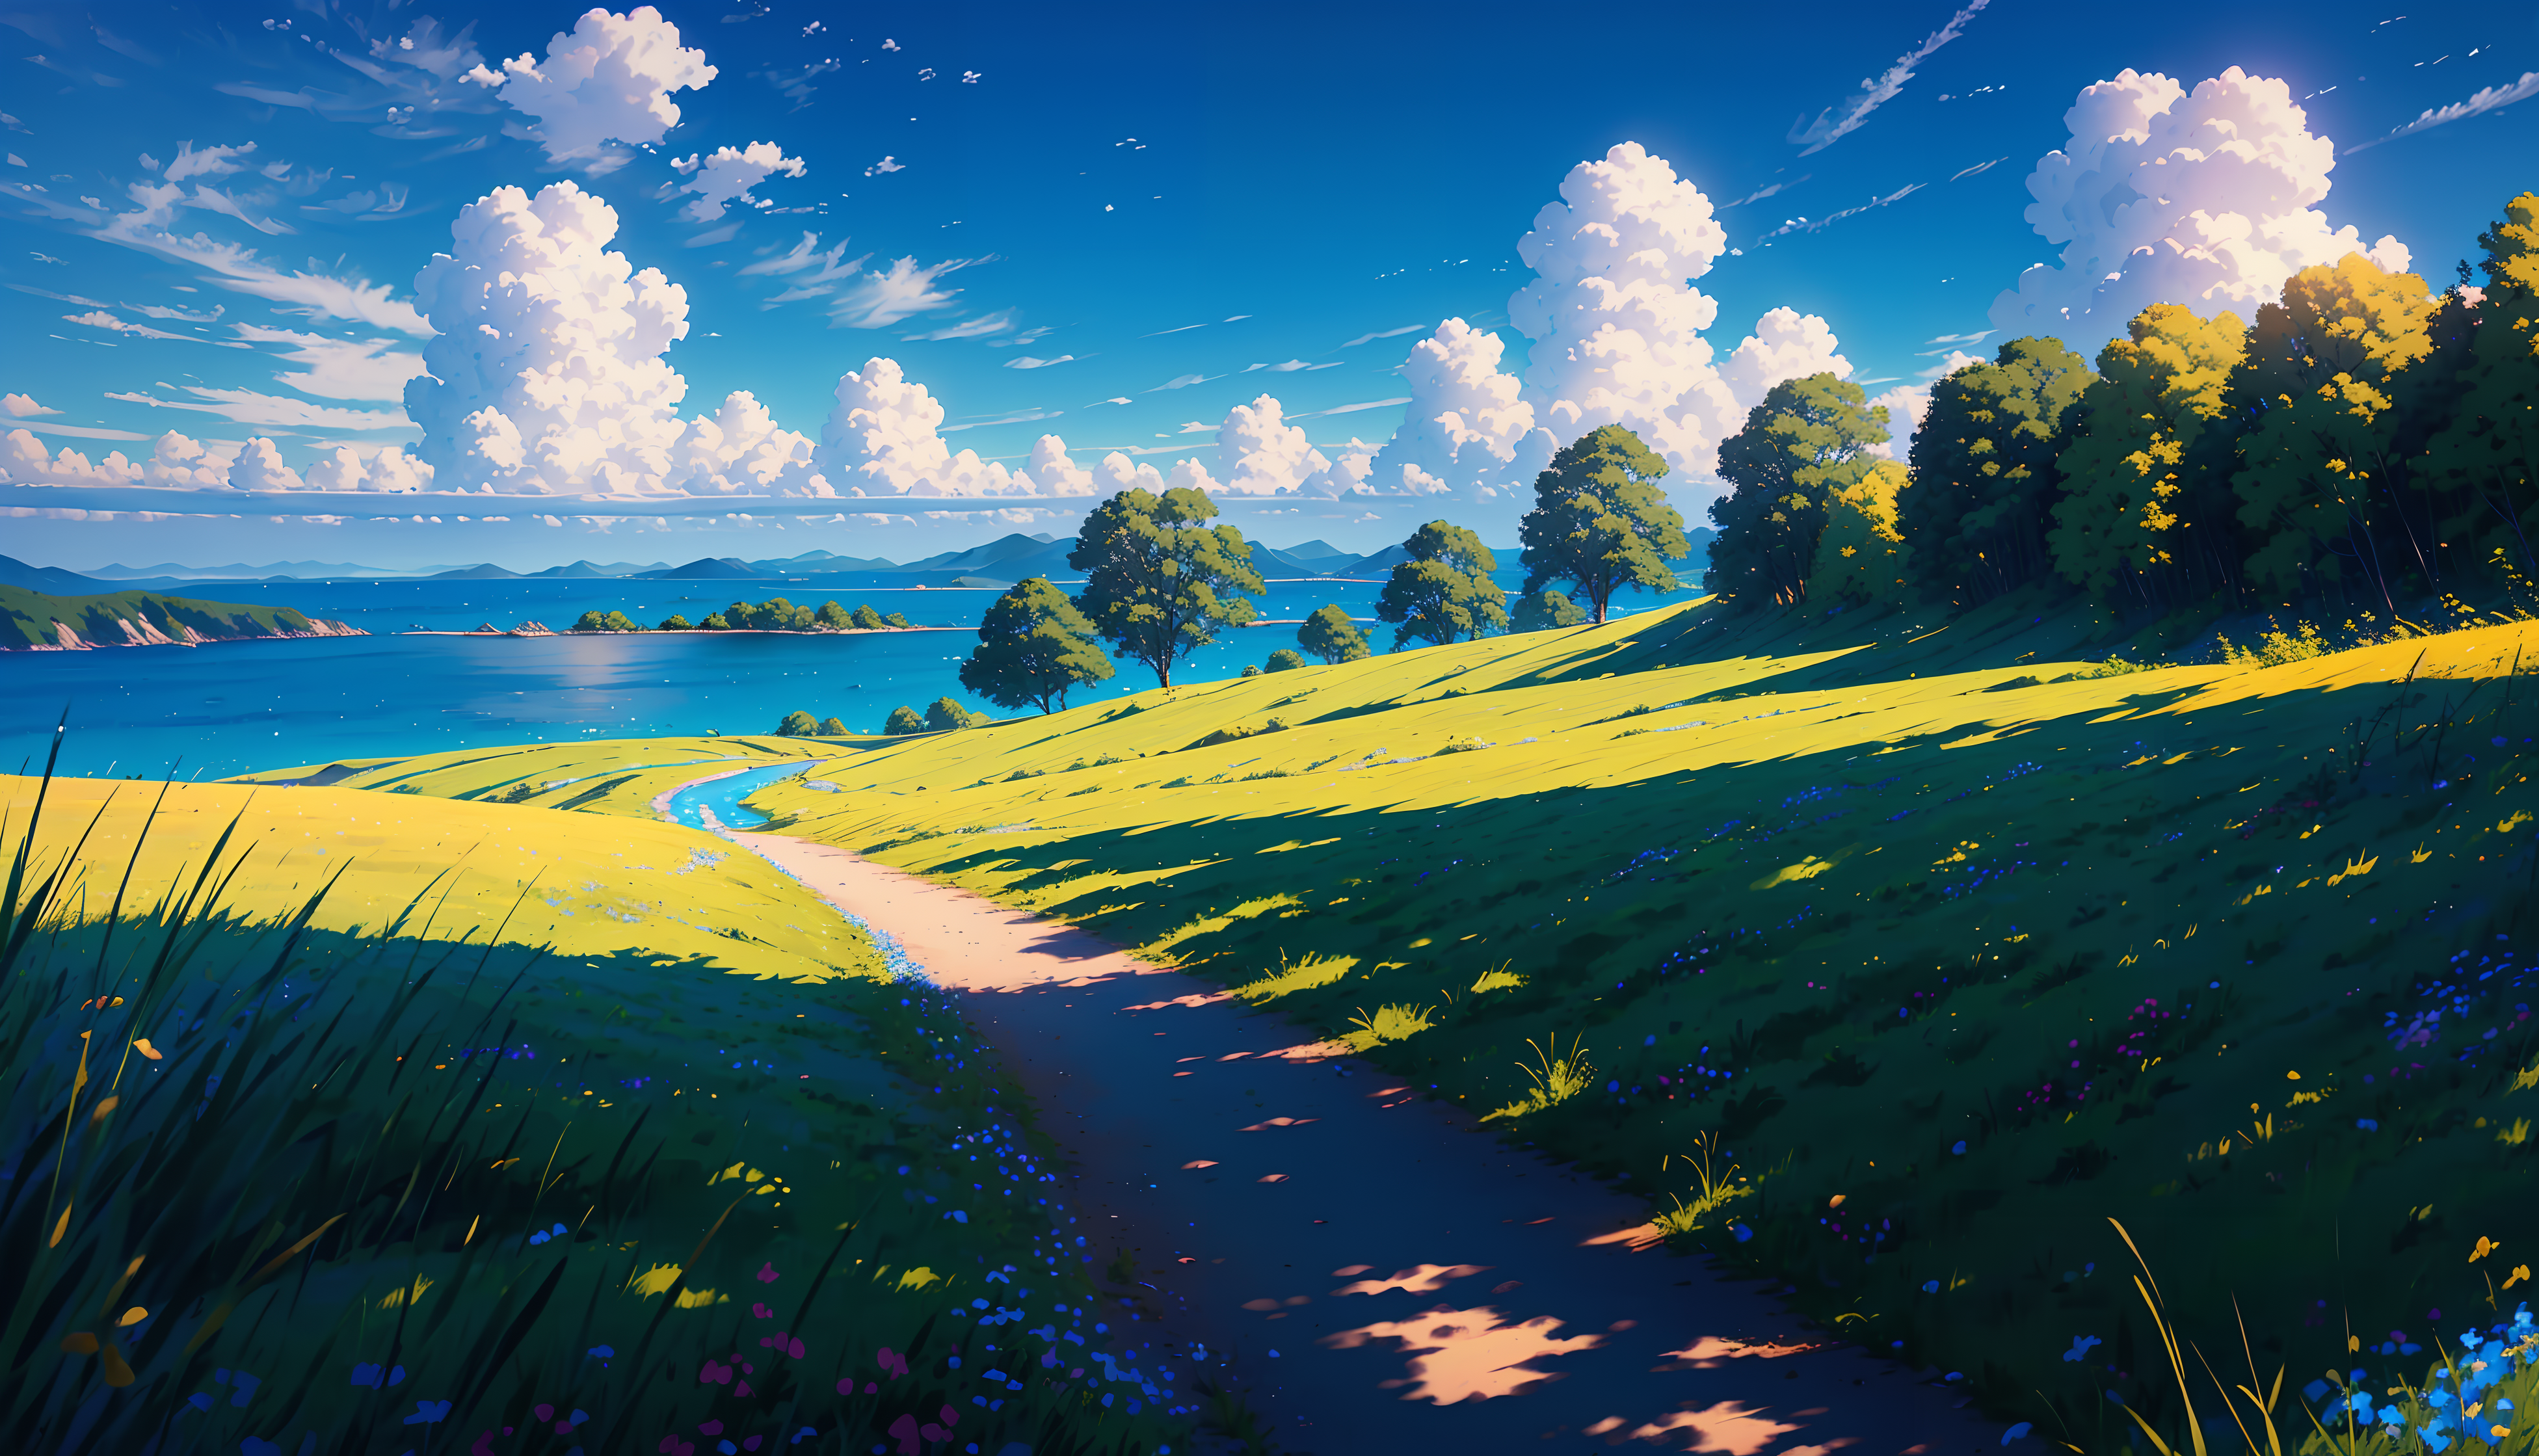 Anime Landscape 4k Ultra HD Wallpaper by Abyss